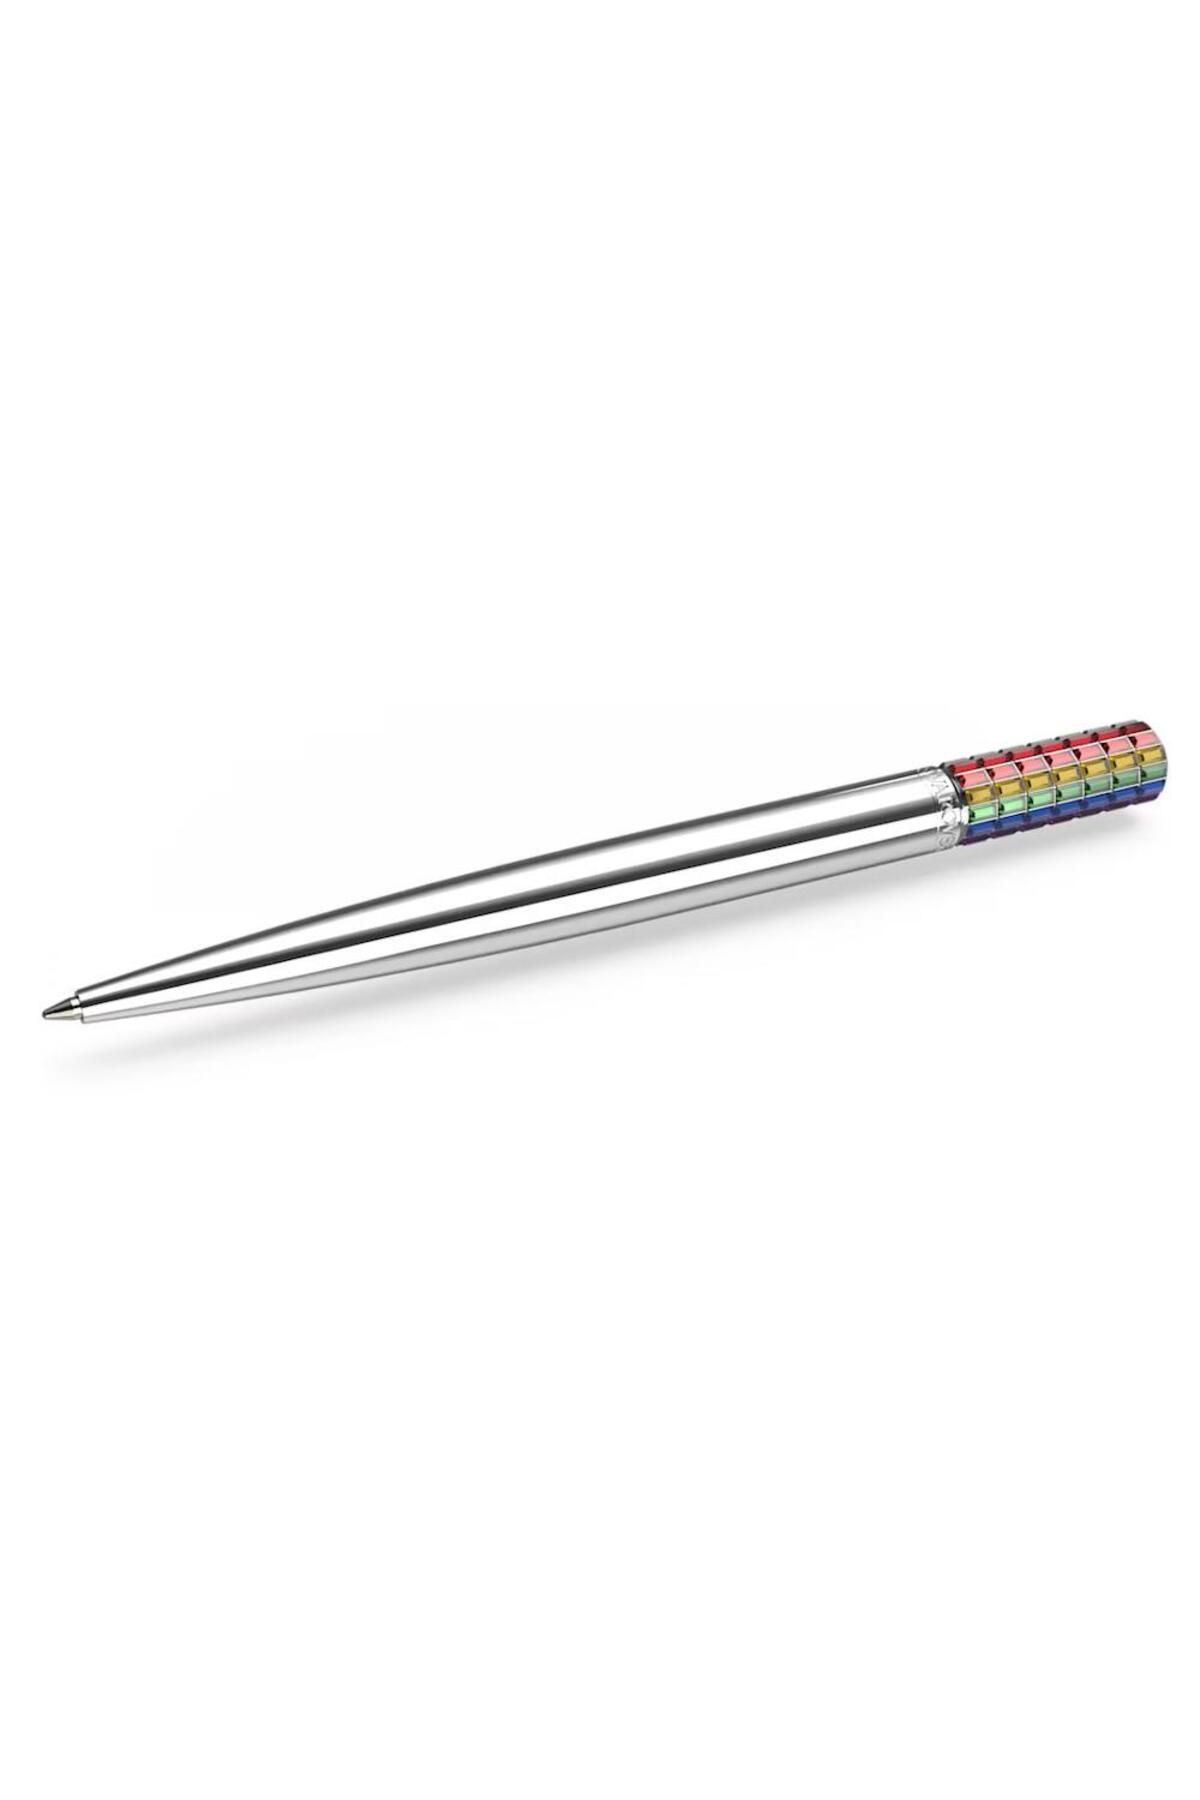 Swarovski 5637772 Swarovski KALEM Ballpoint pen, Multicolored, Chrome plated